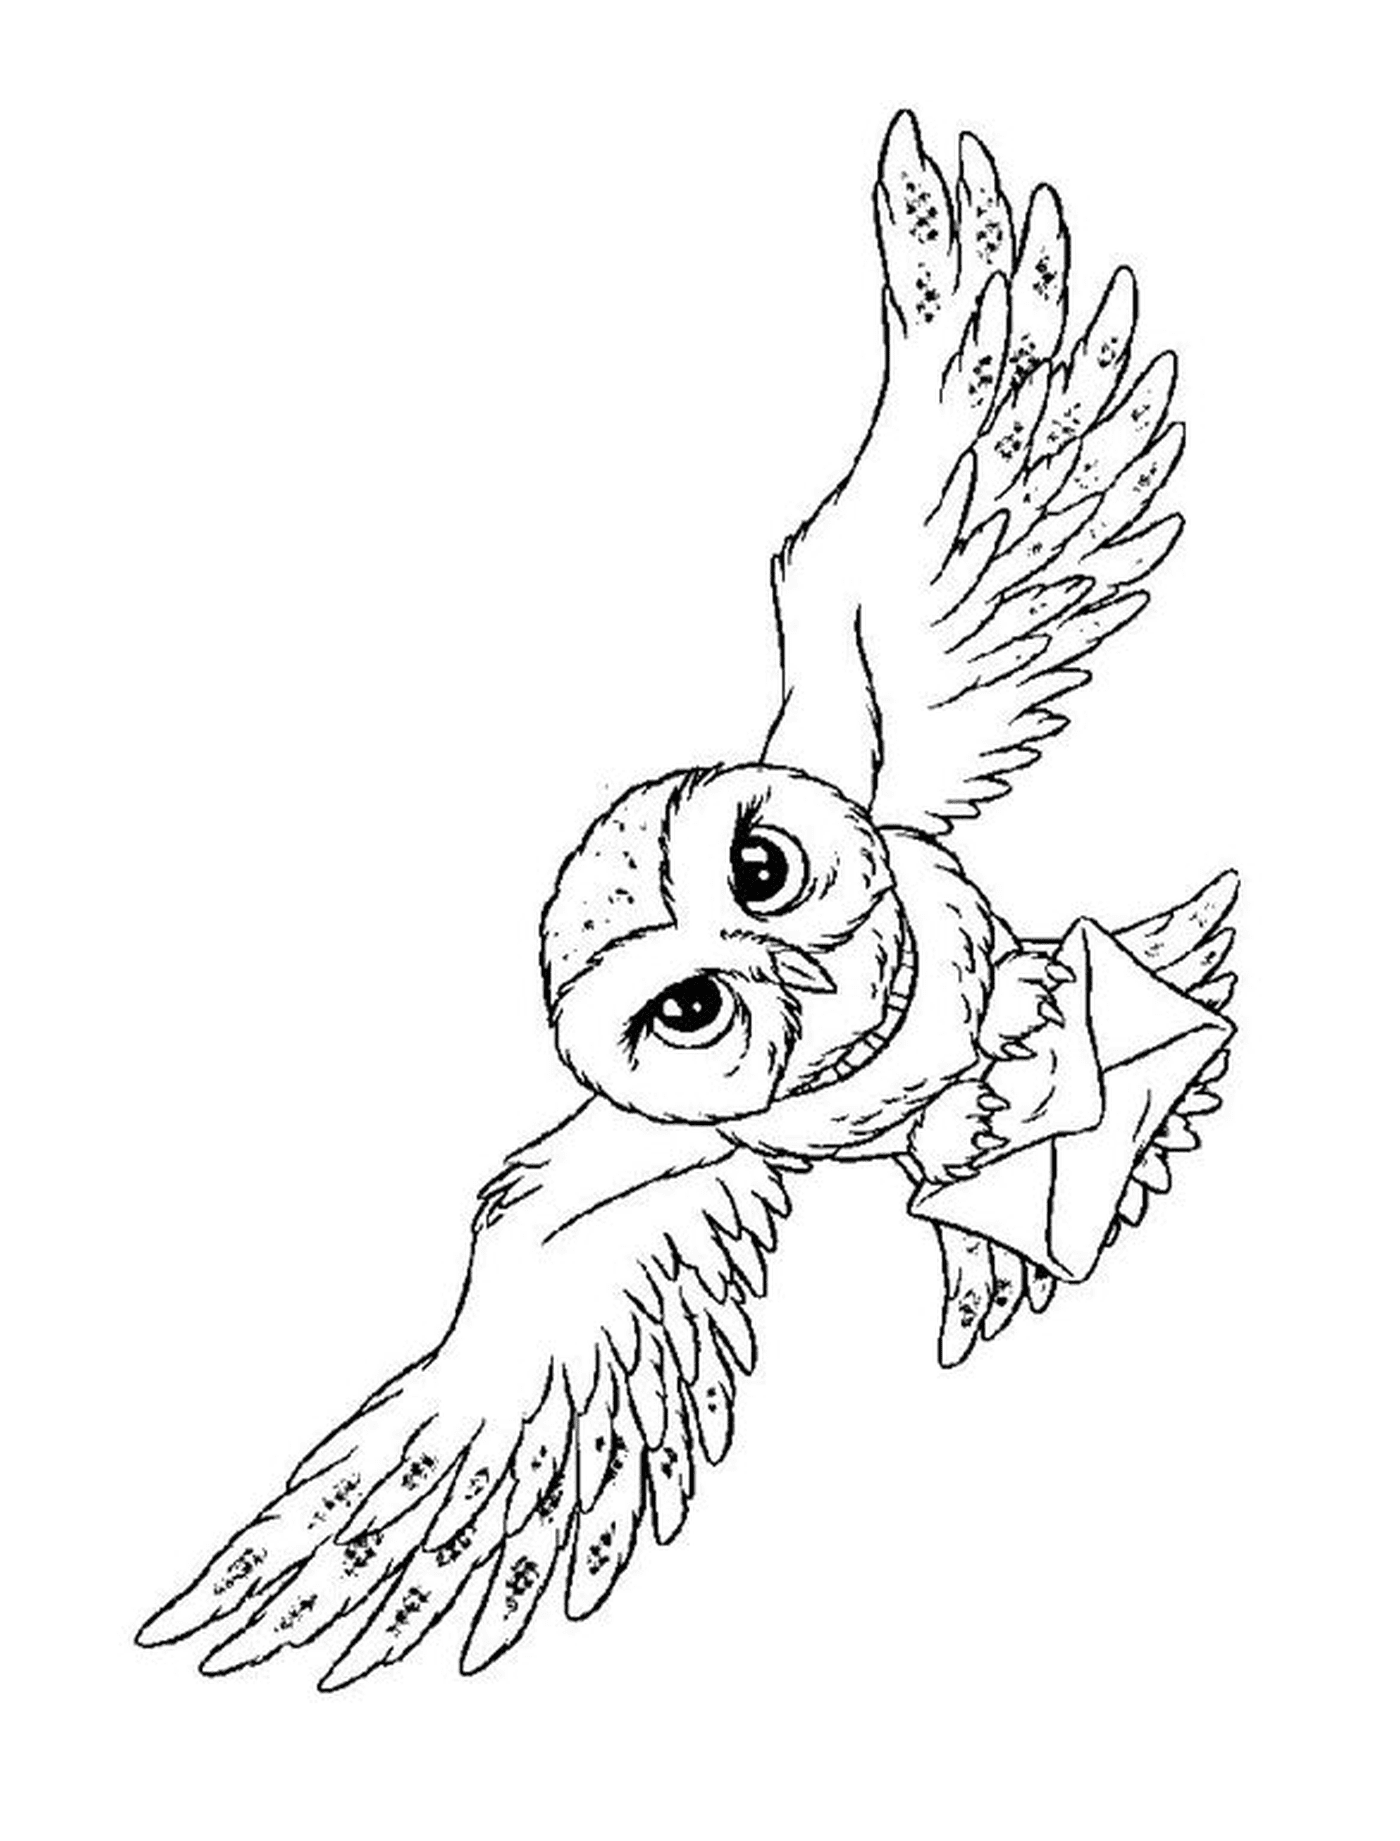  Hedwige en vuelo 